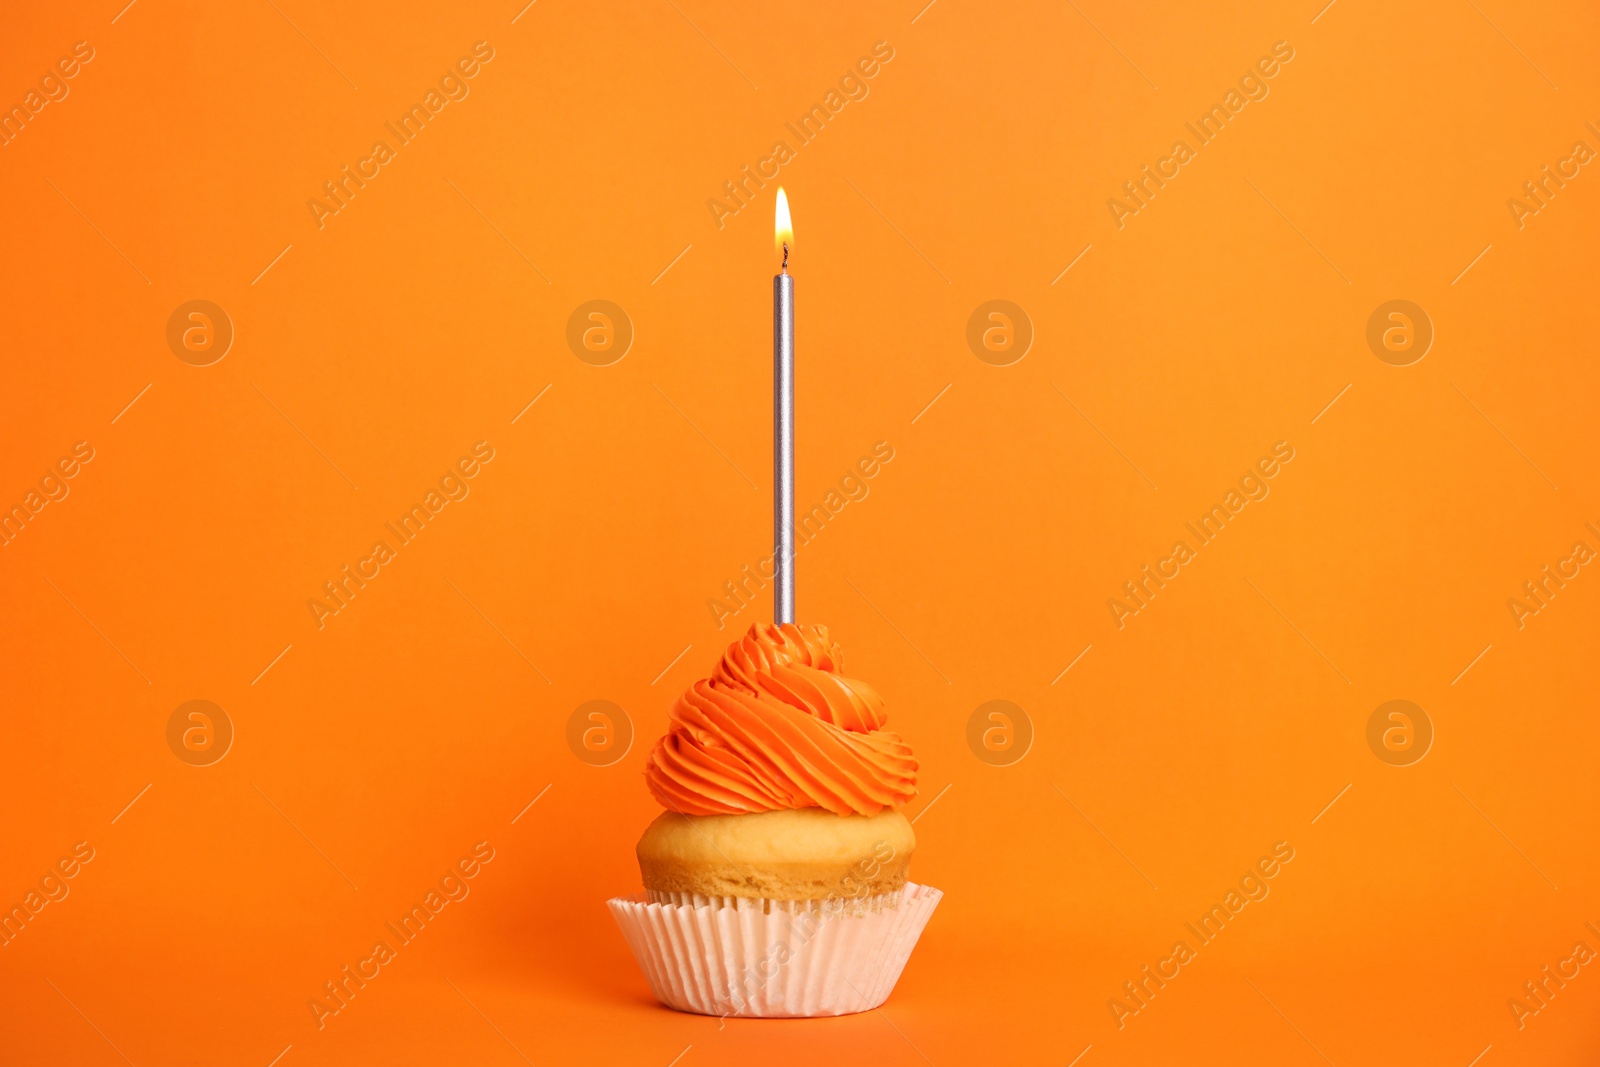 Photo of Birthday cupcake with candle on orange background